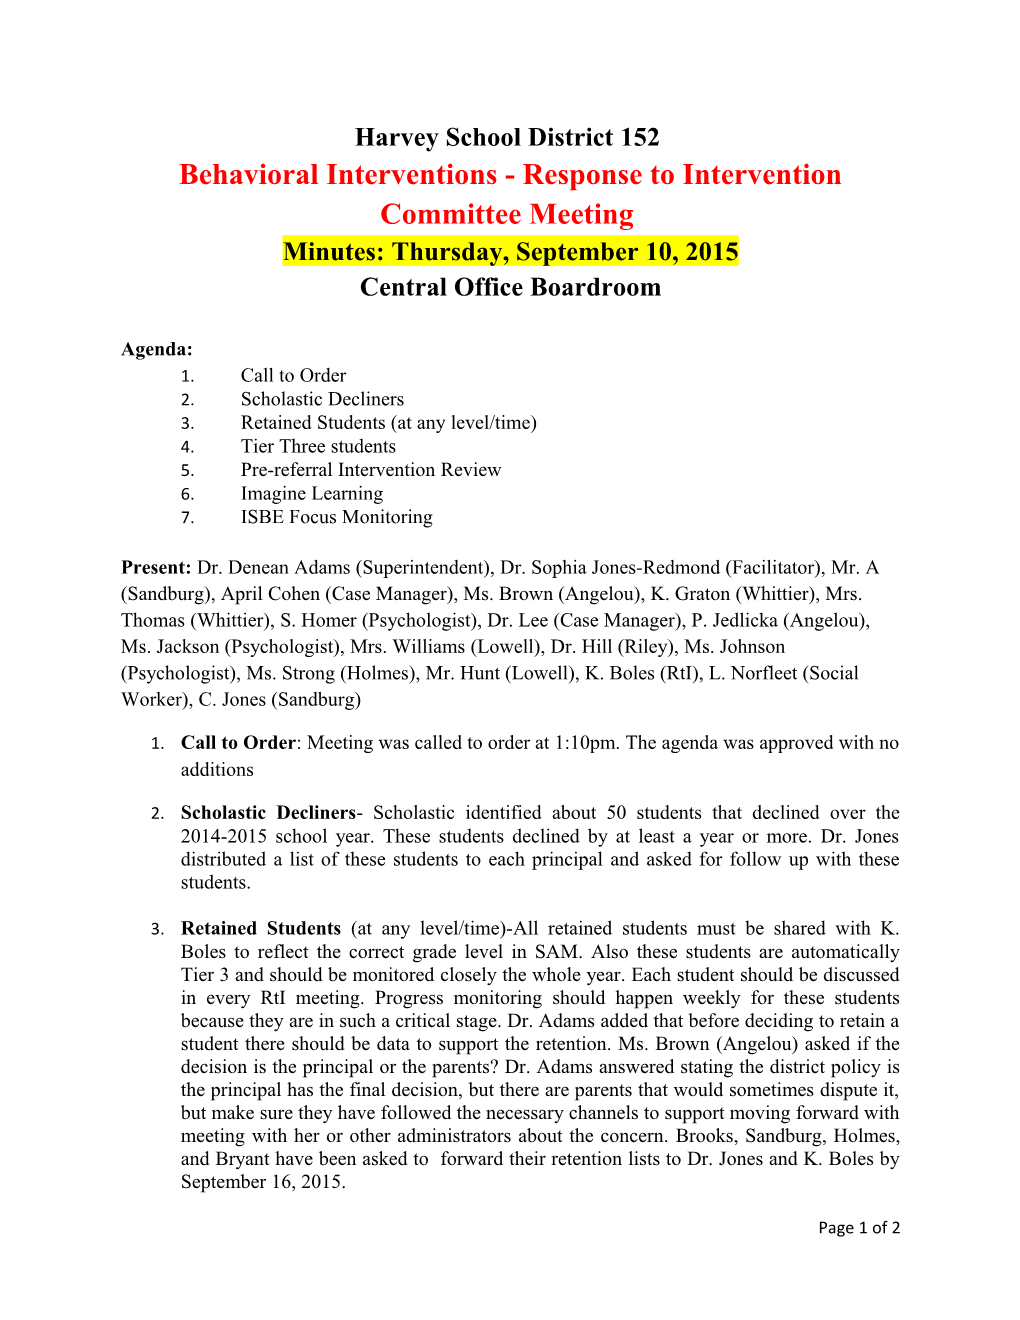 Behavioral Interventions - Response to Intervention